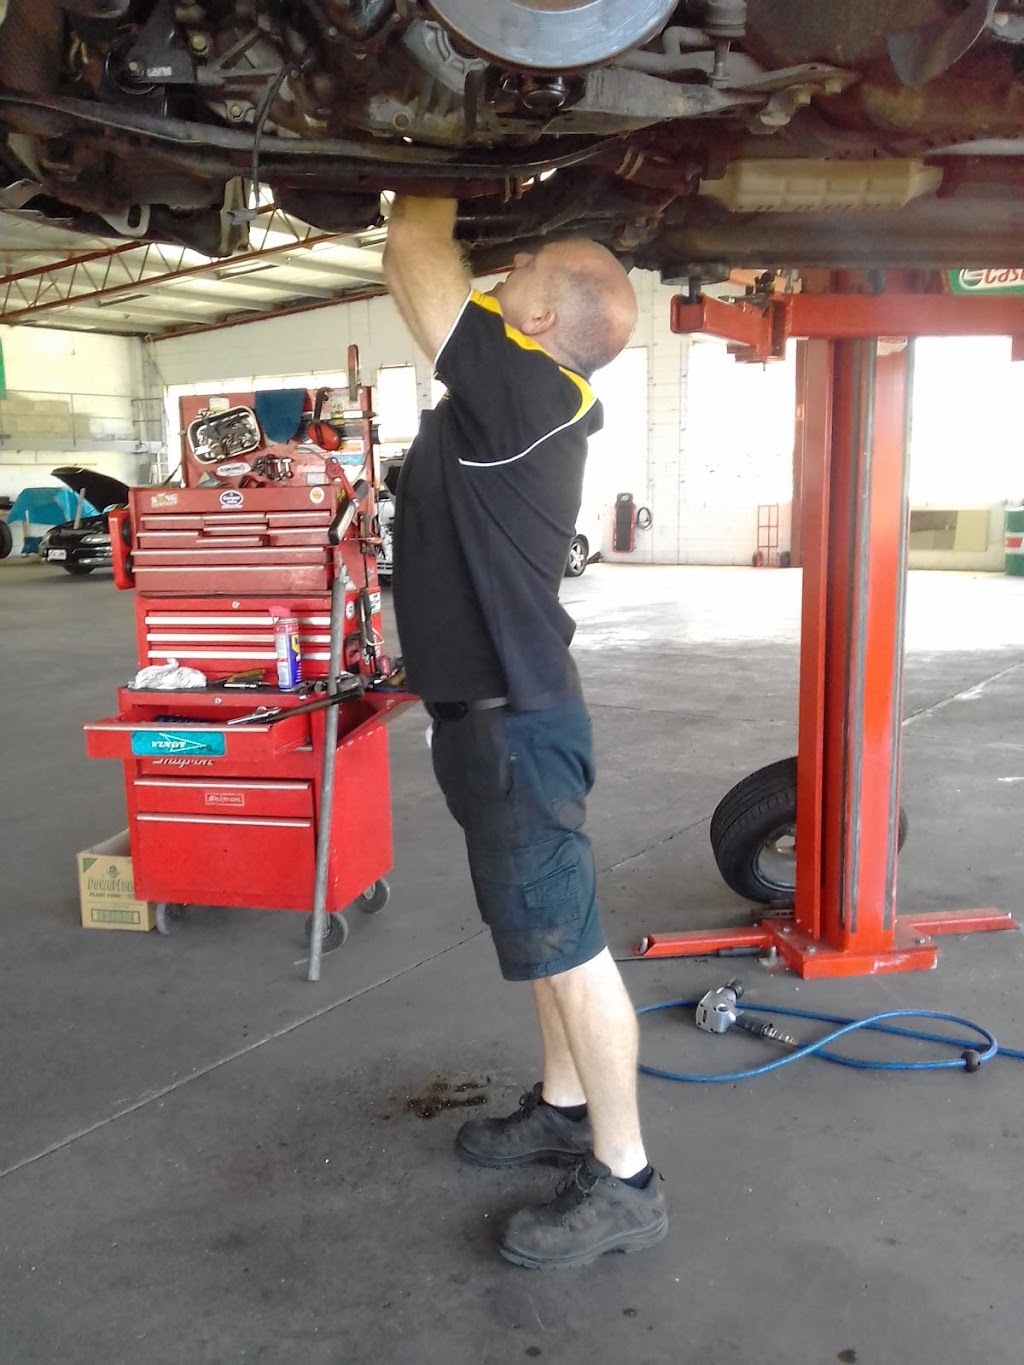 Pascoe Mechanical Bayside | car repair | 2/35-37 Wellington St, Ormiston QLD 4160, Australia | 0738214048 OR +61 7 3821 4048